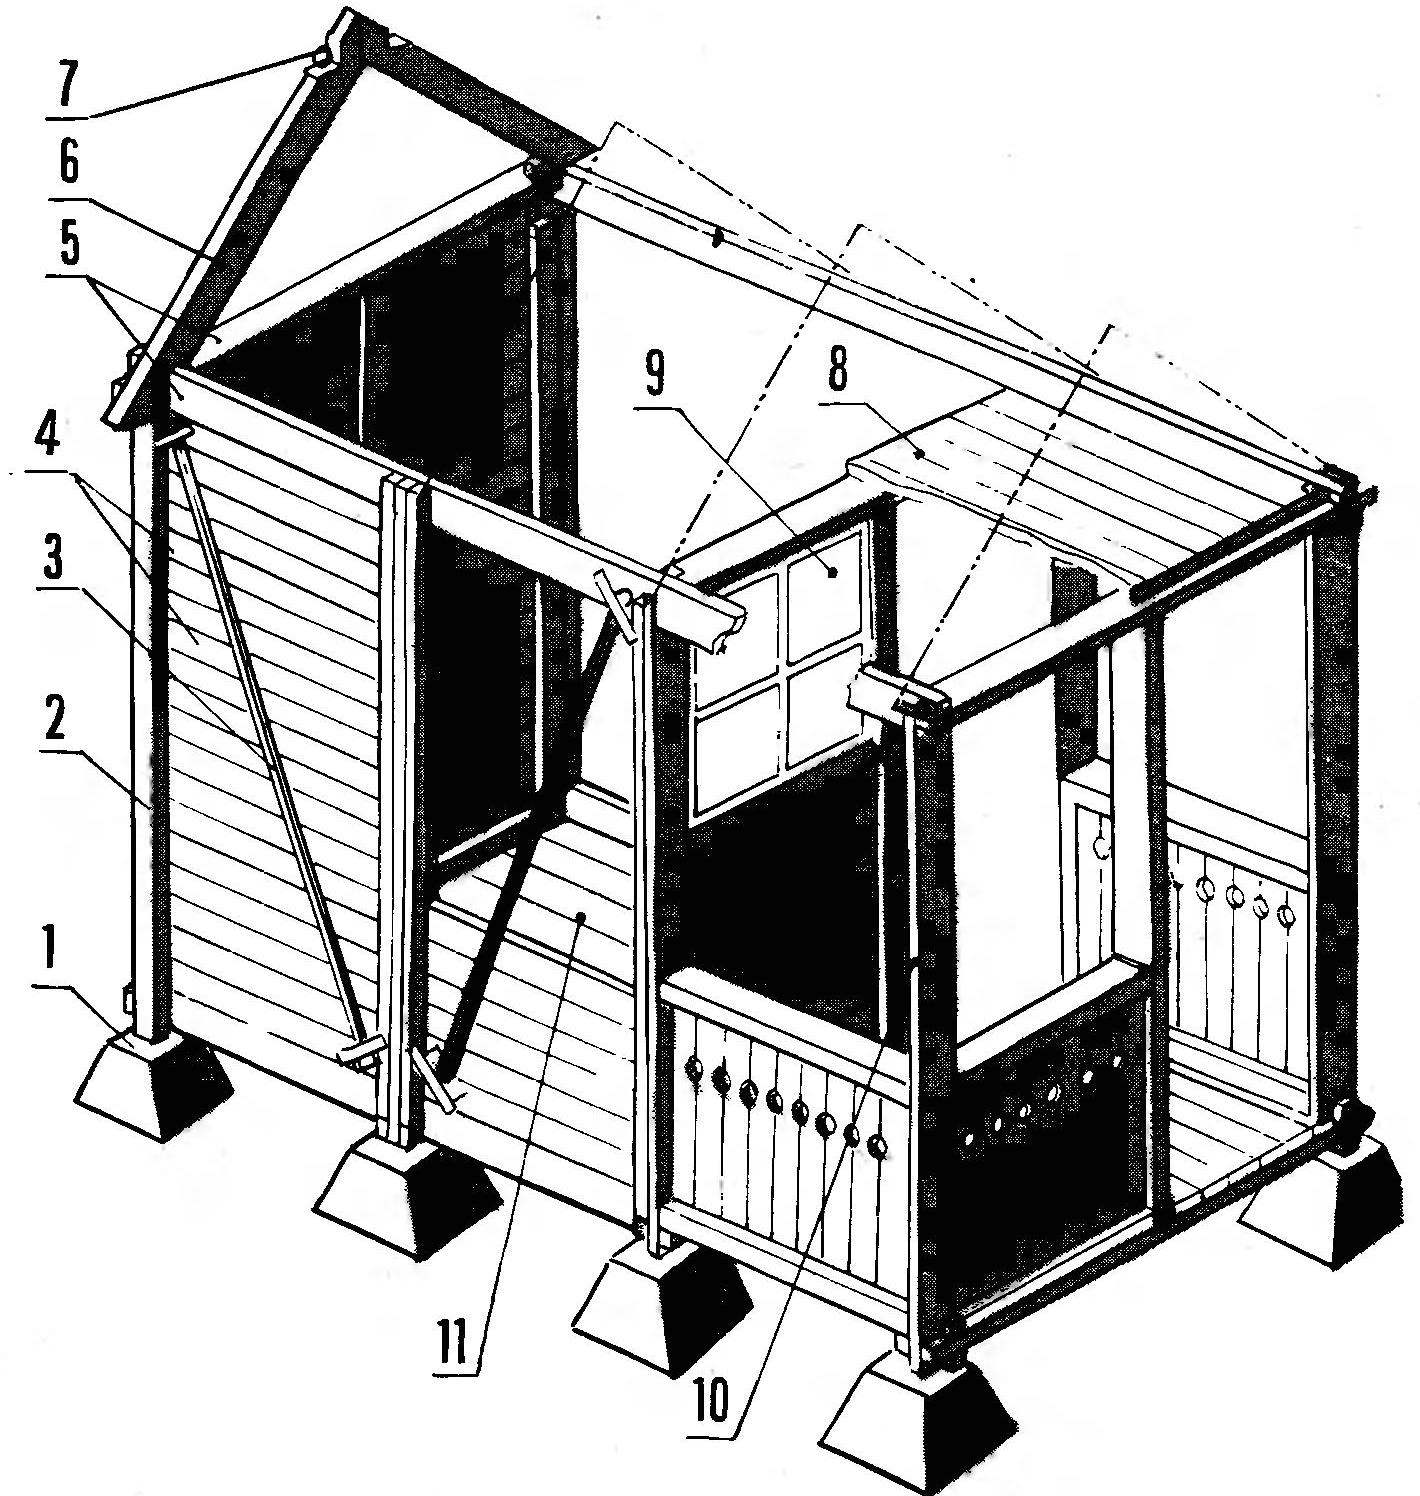 Fig. 1. Prefabricated amenities building